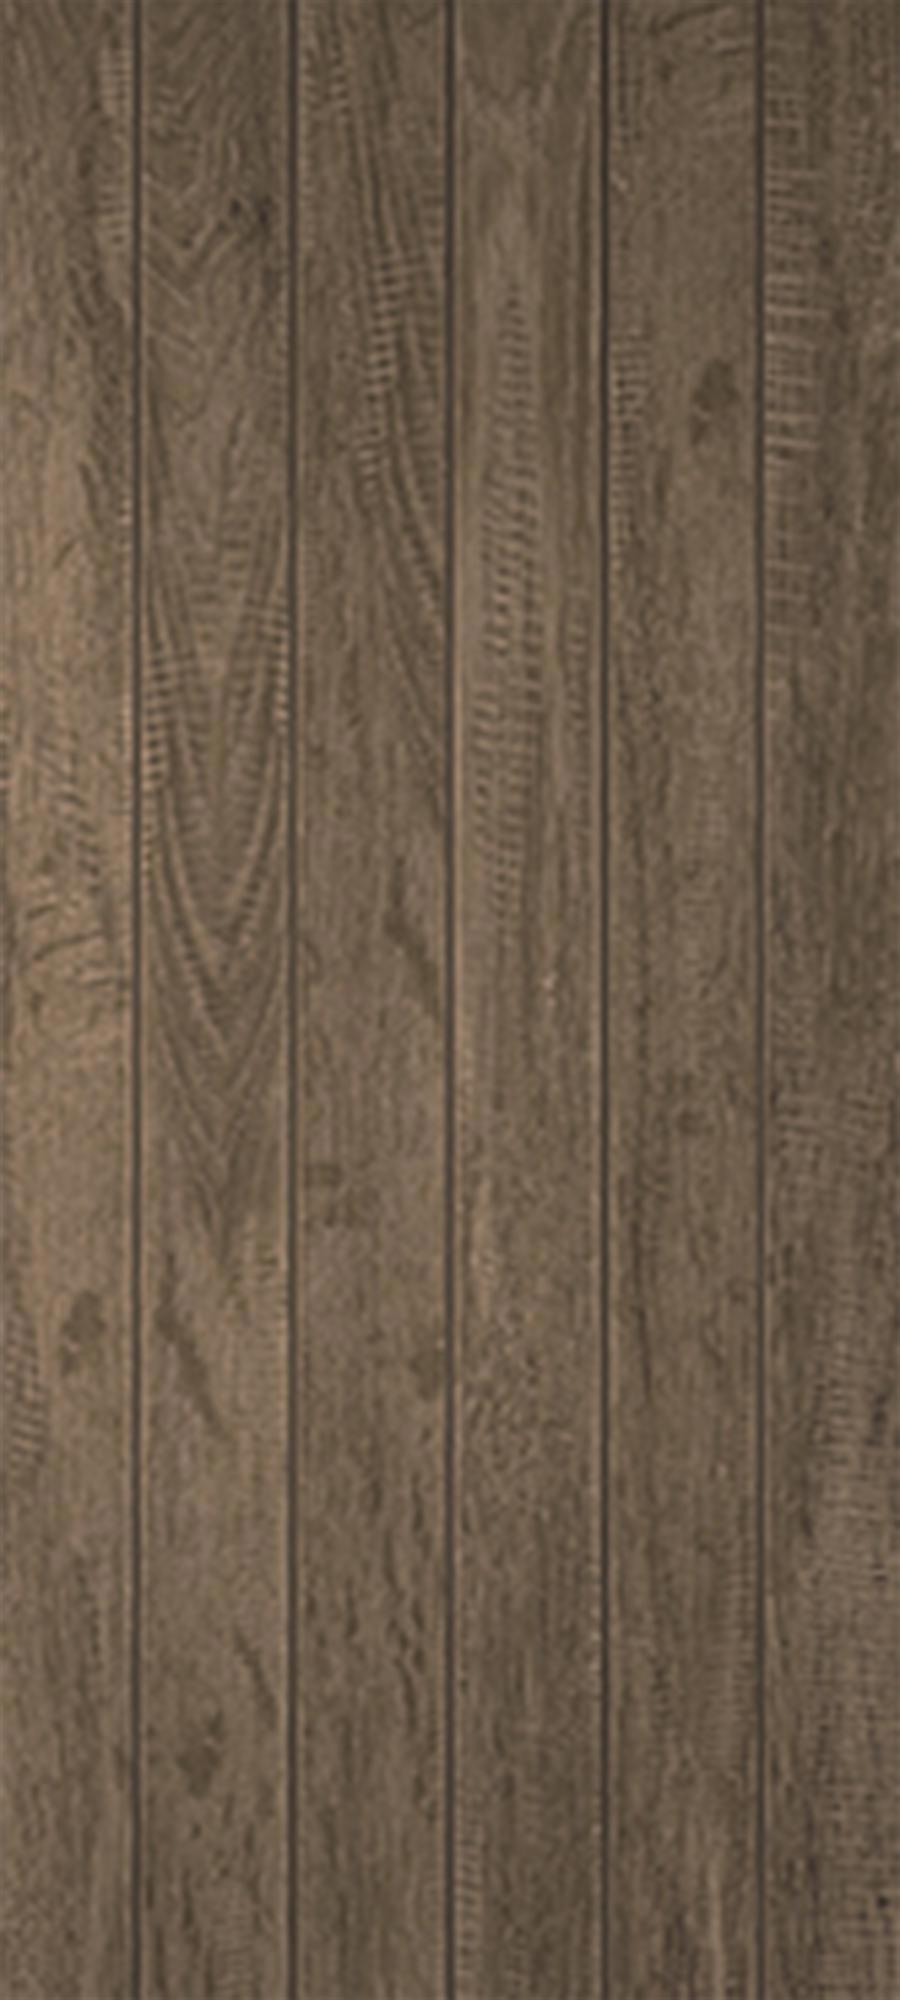 90284959 Керамическая плитка Effetto Wood Grey Dark 02 25х60см, цена за упаковку STLM-0168827 CRETO